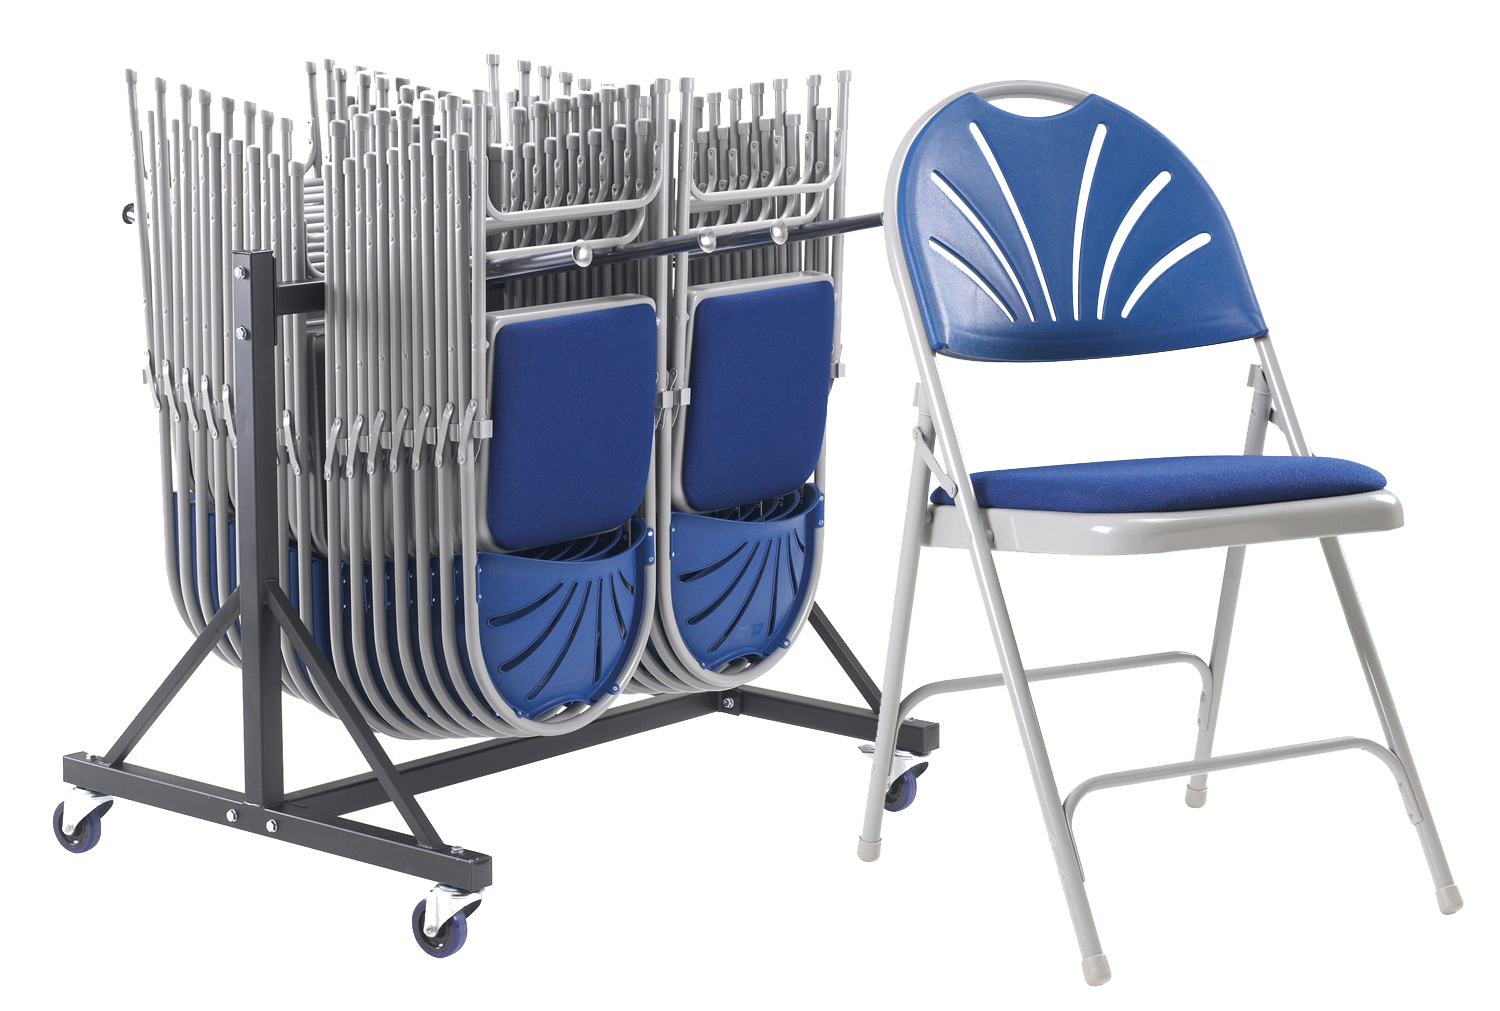 Fan Back Steel Upholstered Seat Folding Office Chair Bundle Deal (36 Office Chairs & 1 Trolley), Blue